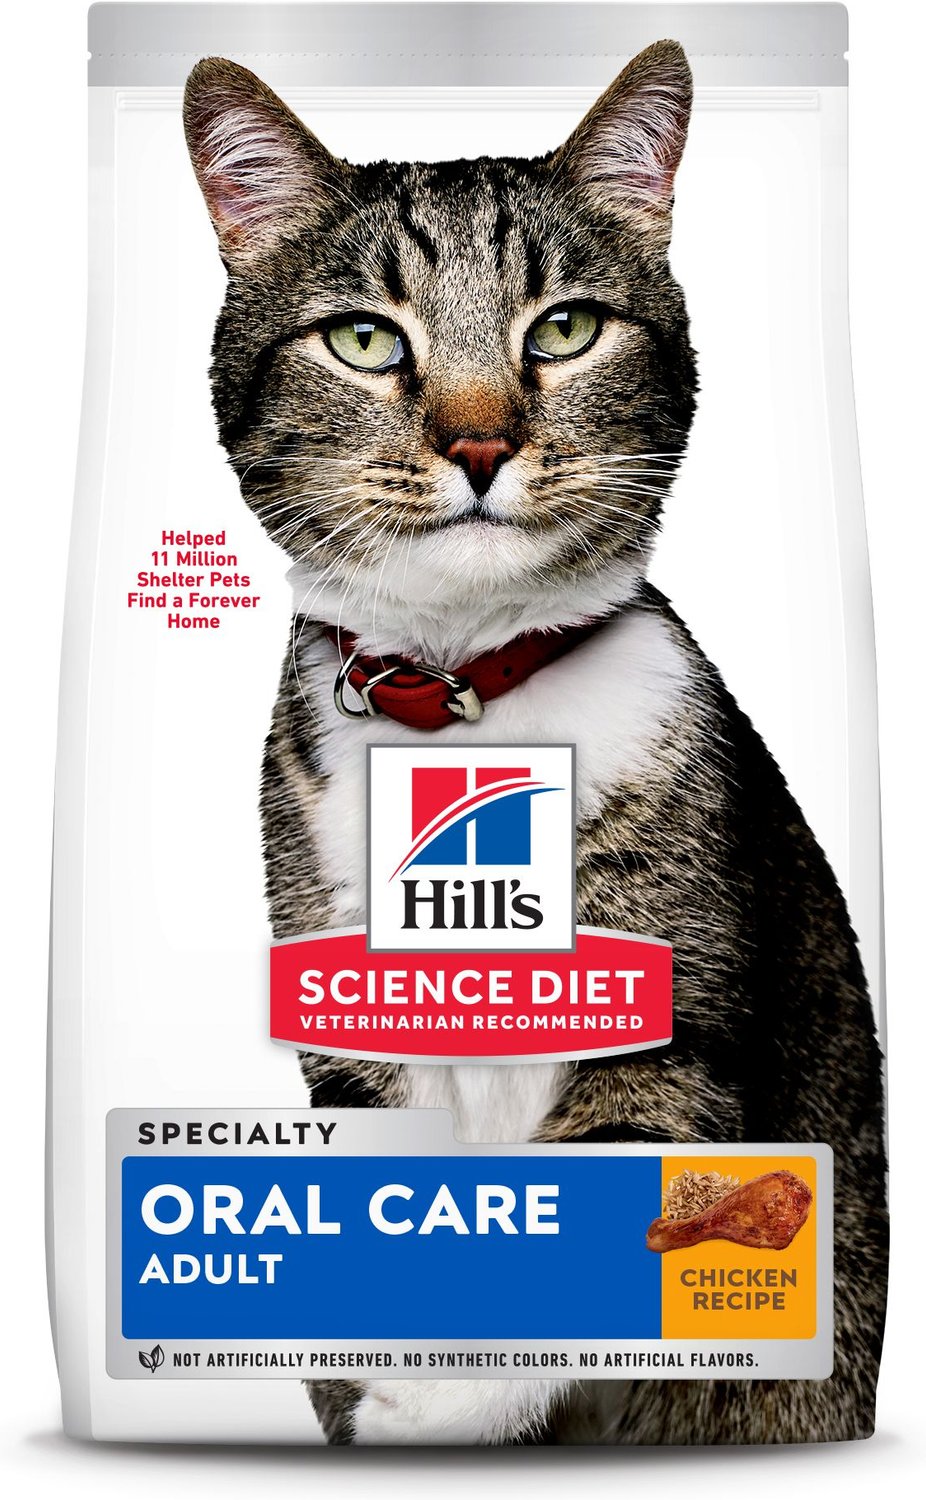 hills oral care cat food